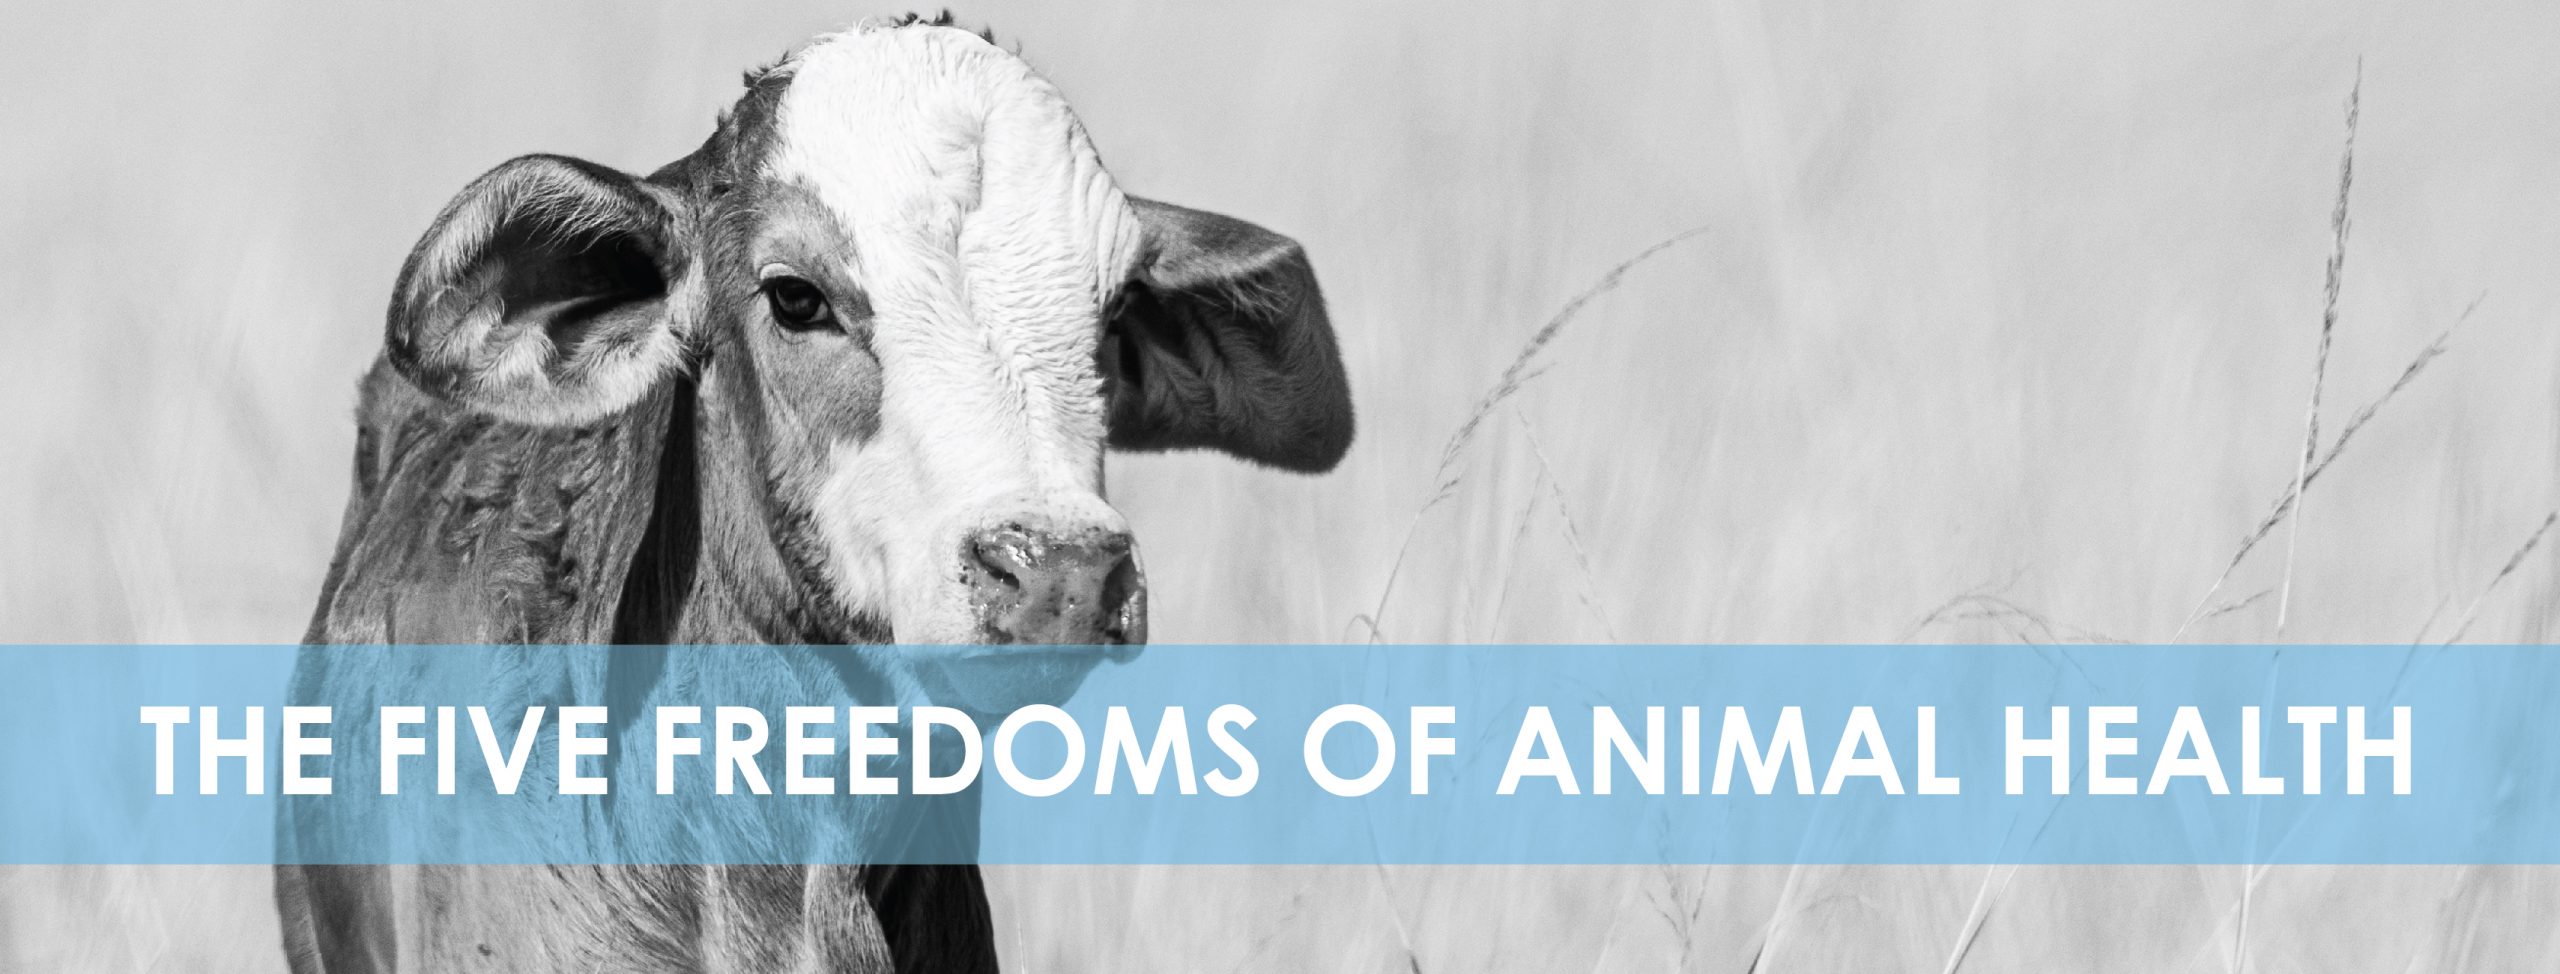 The Five Freedoms of Animal Welfare - GreenBio and animal production